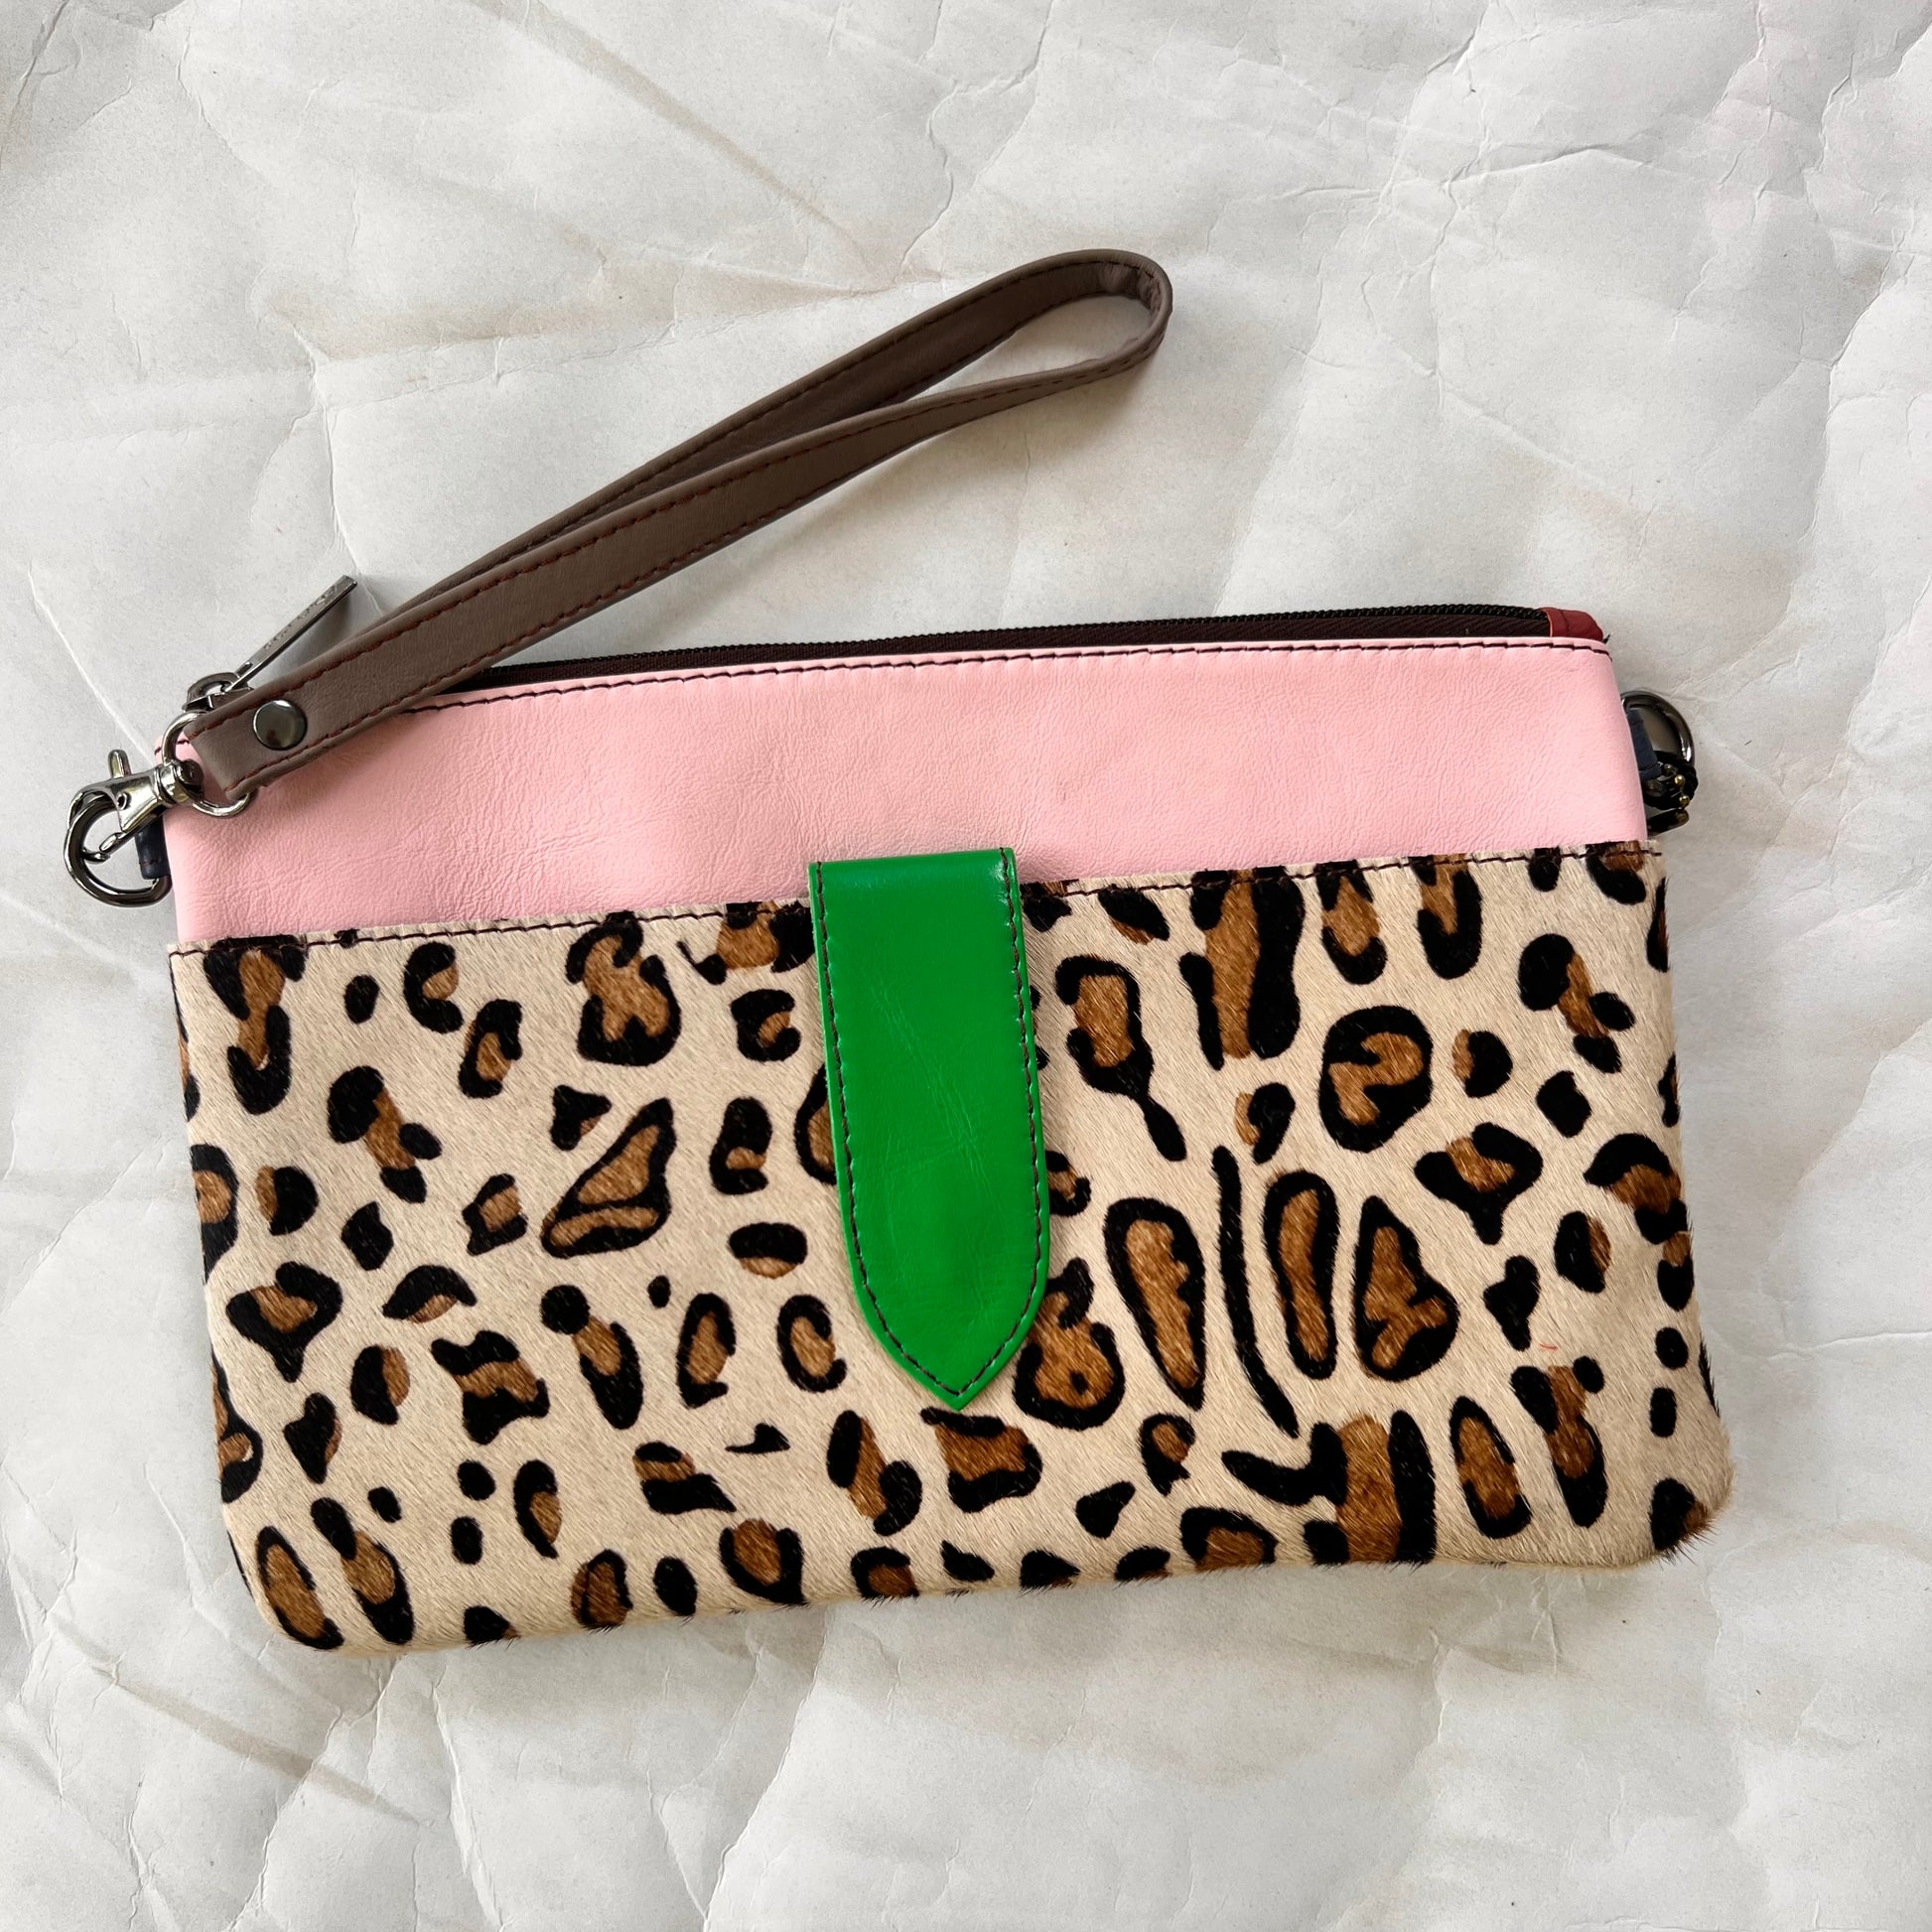 green rectangular bag with cheetah print pocket, green tab, and grey wristlet strap.